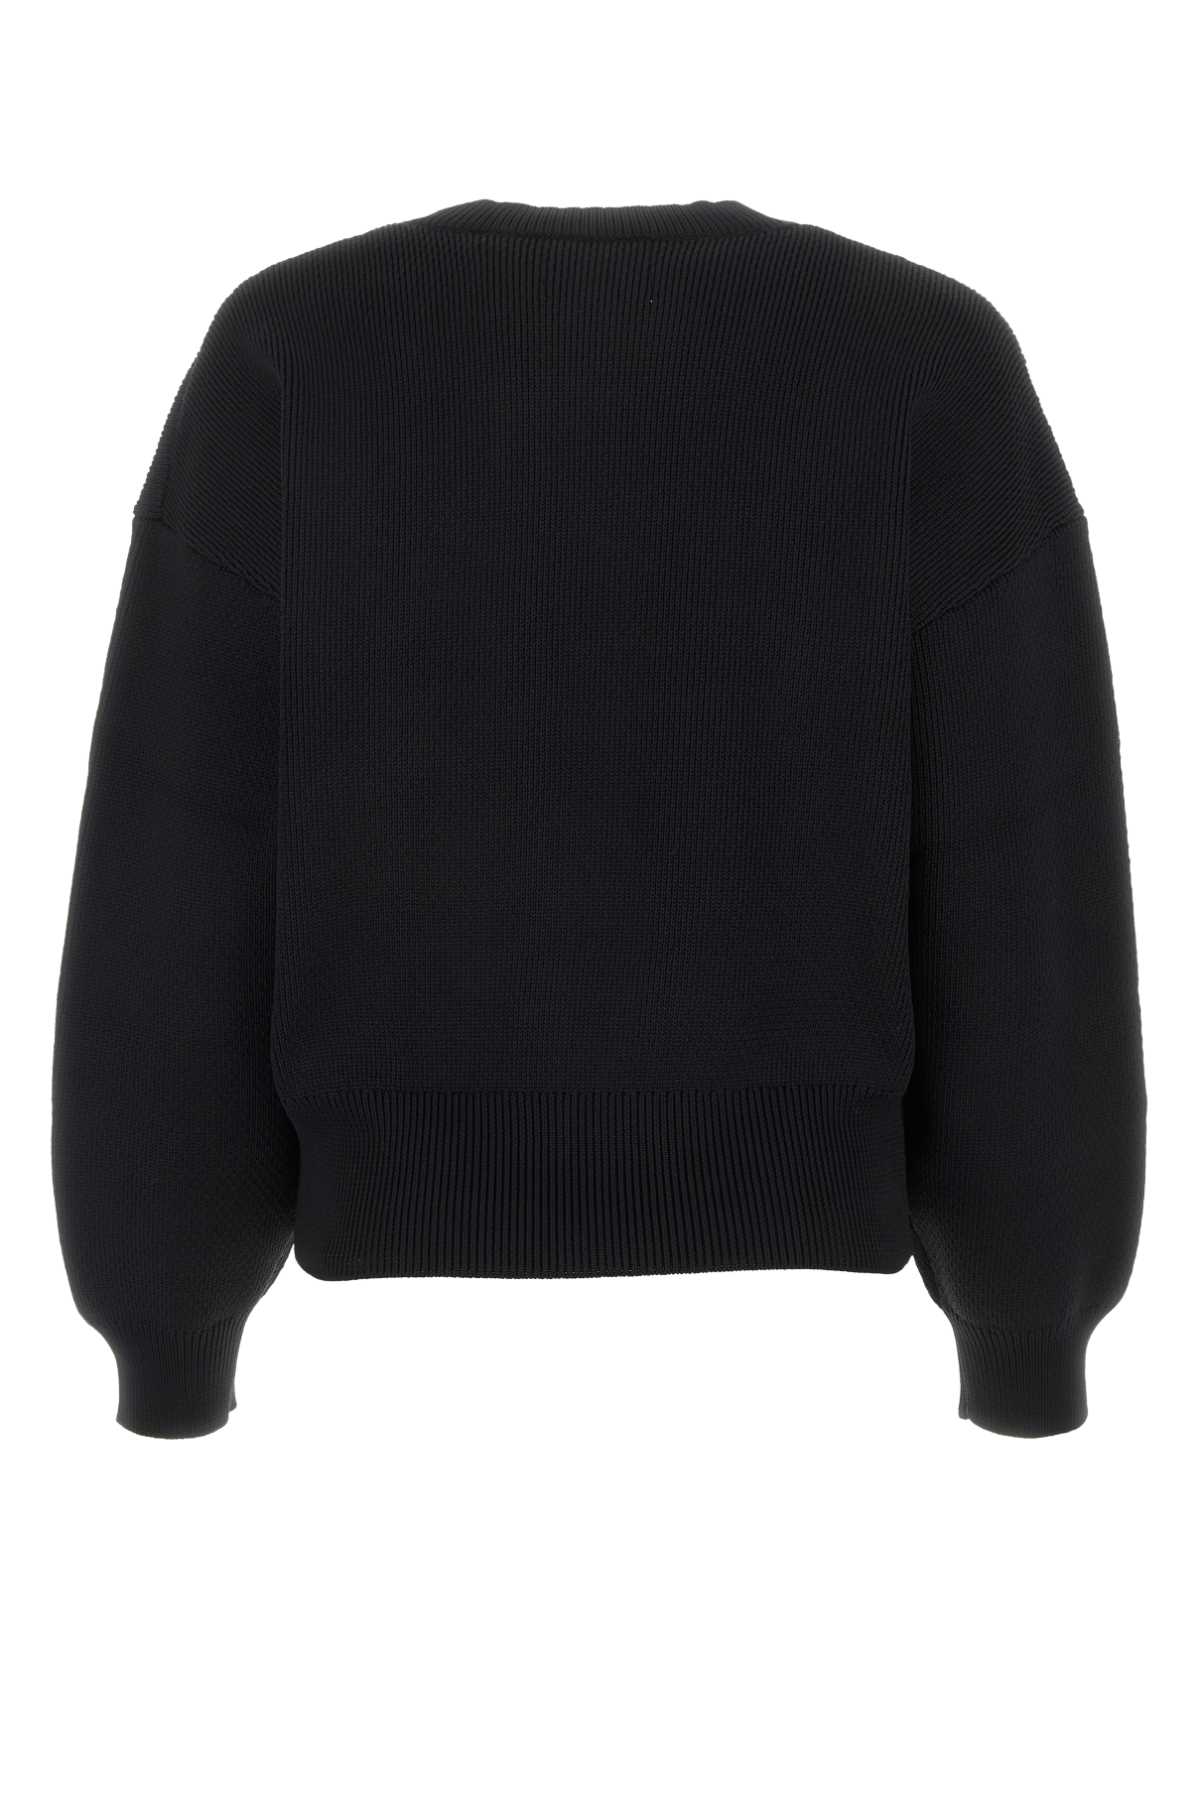 Marant Etoile Black Polyester Blend Ails Sweater